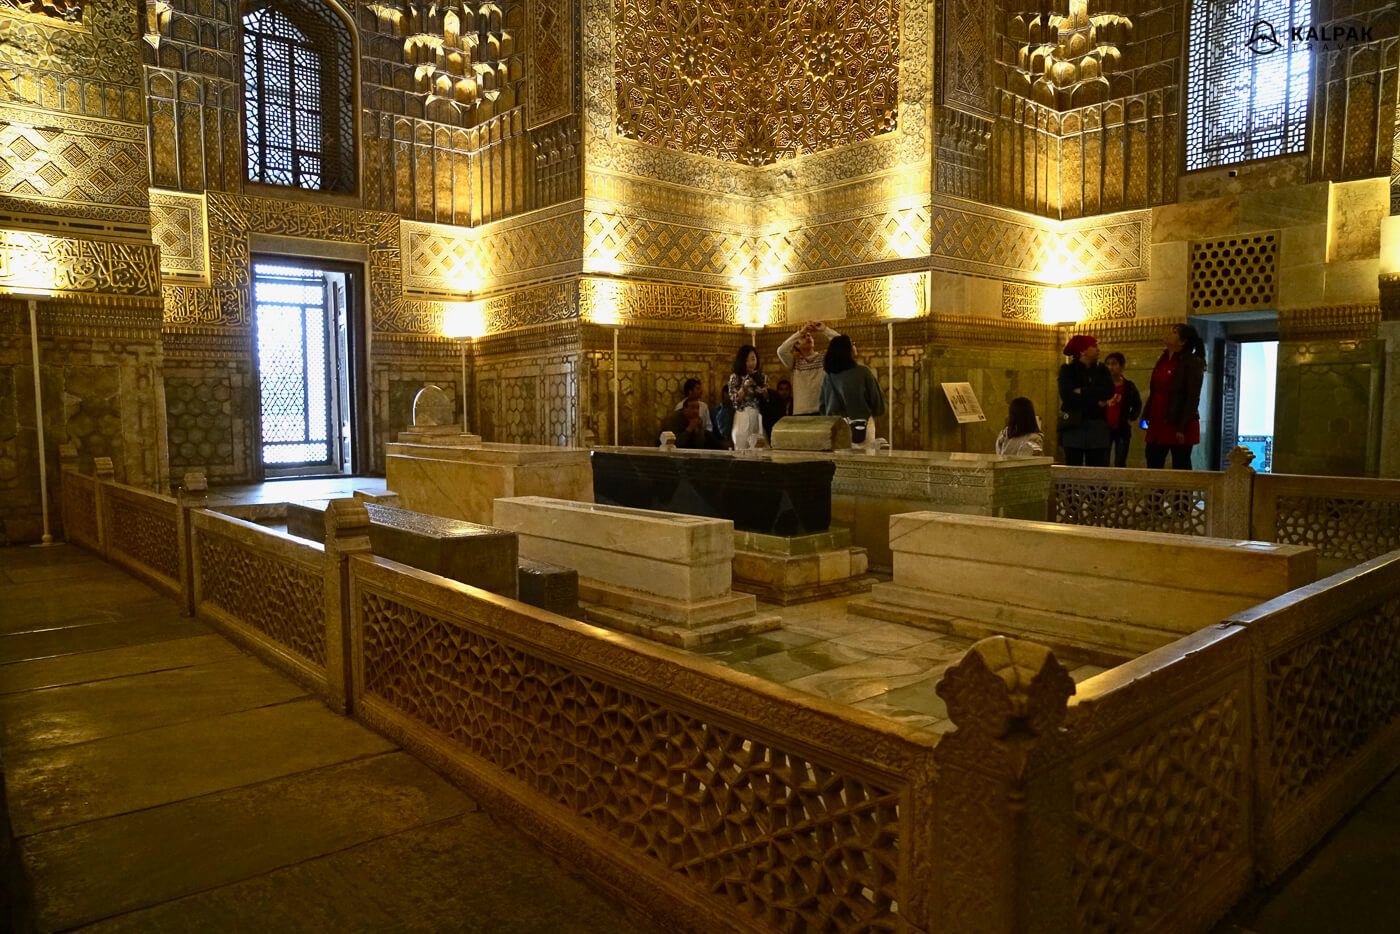 Gur emir mausoleum in Samarkand